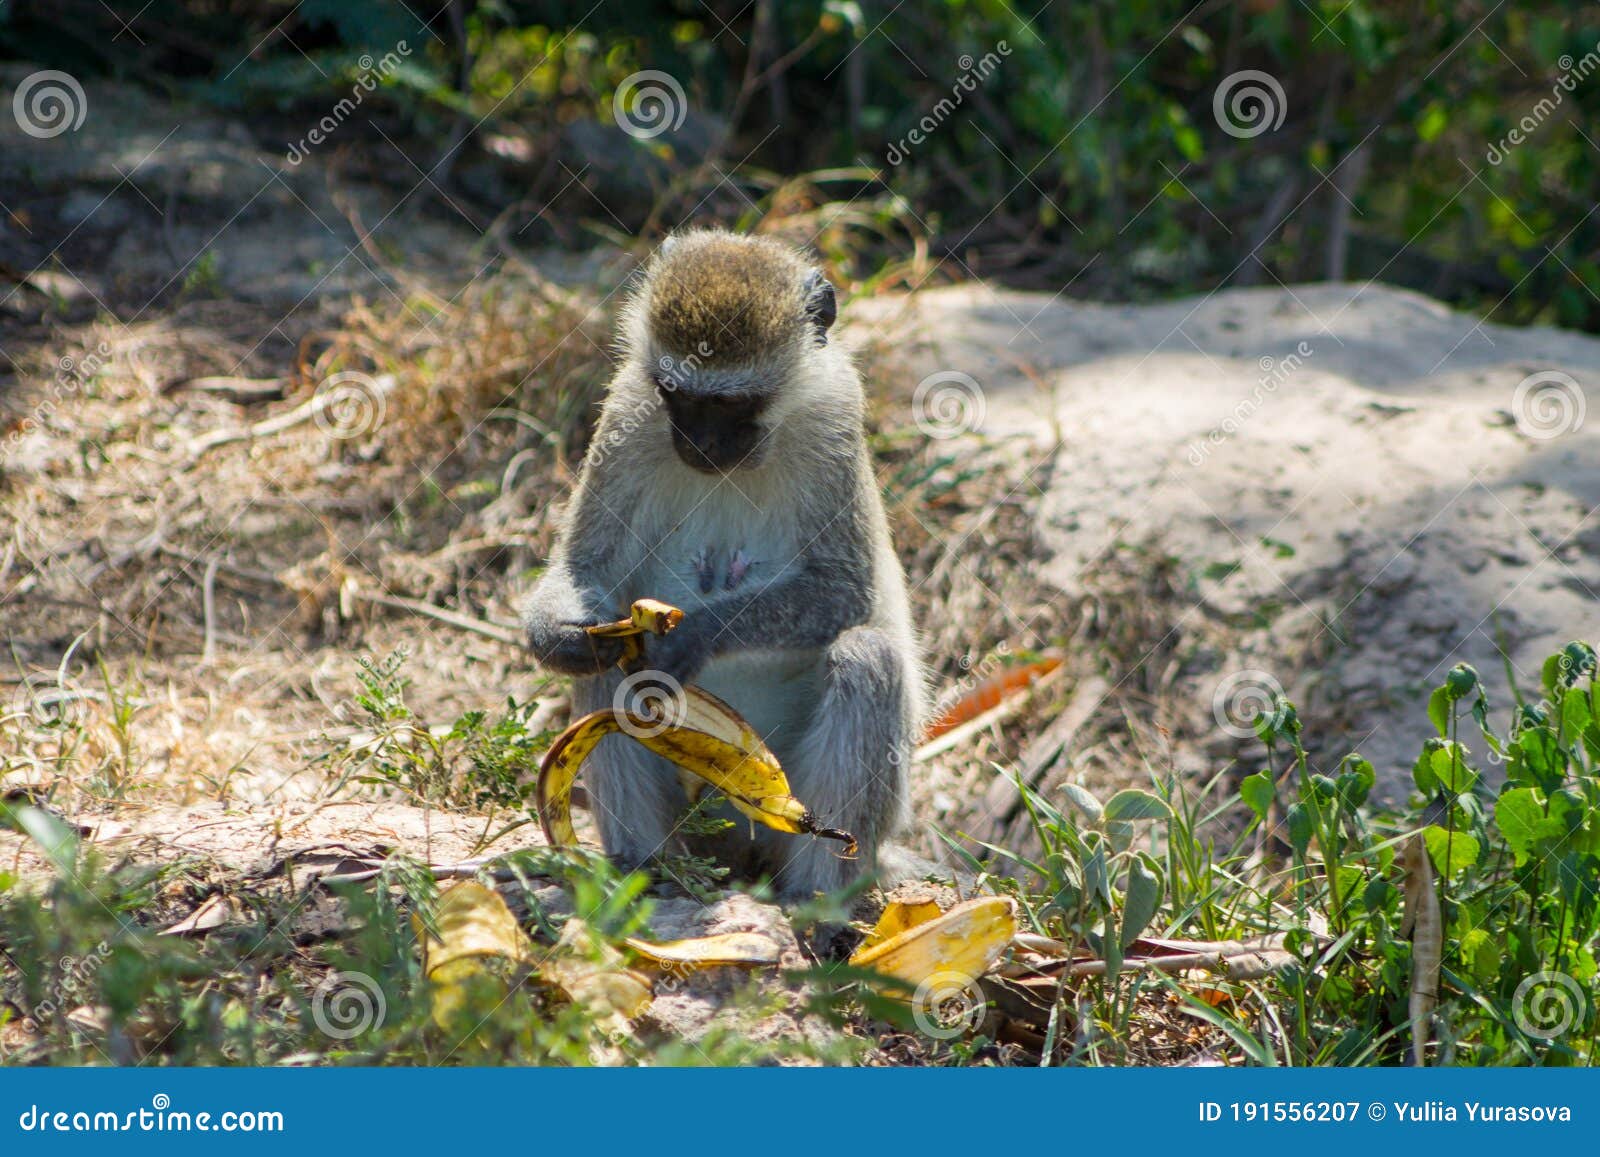 monkey marmoset in africa eating banana